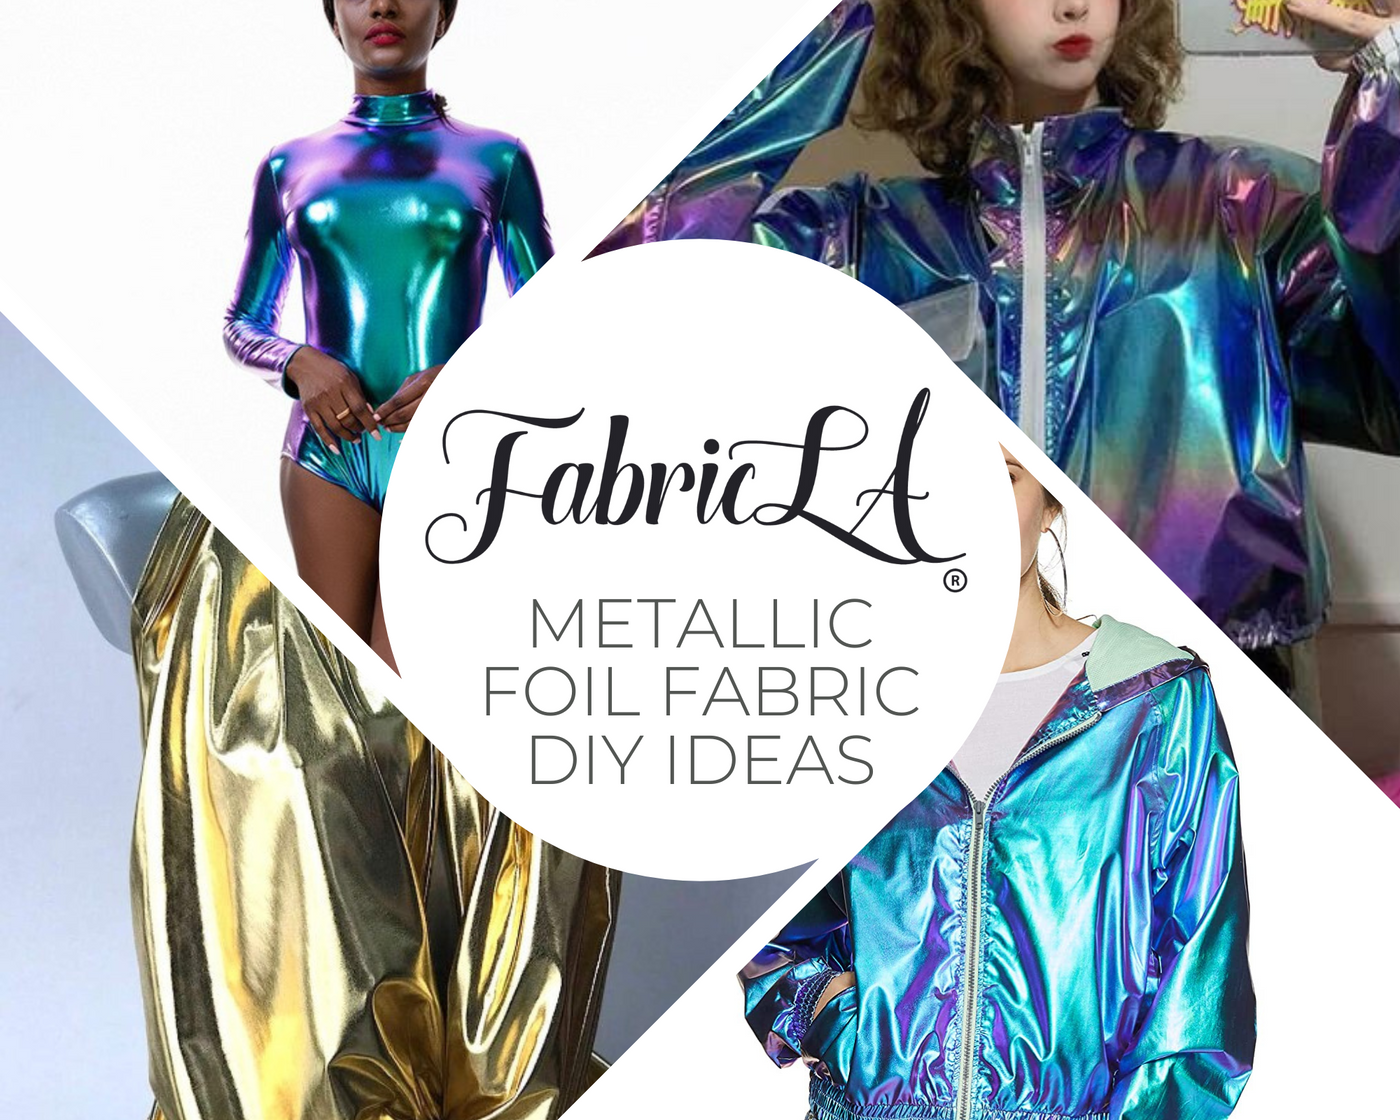 Hologram Metallic Foil Spandex Knit Fabric 4-Way Stretch, 60" Inch Wide| Green/Purple Iridescent - FabricLA.com